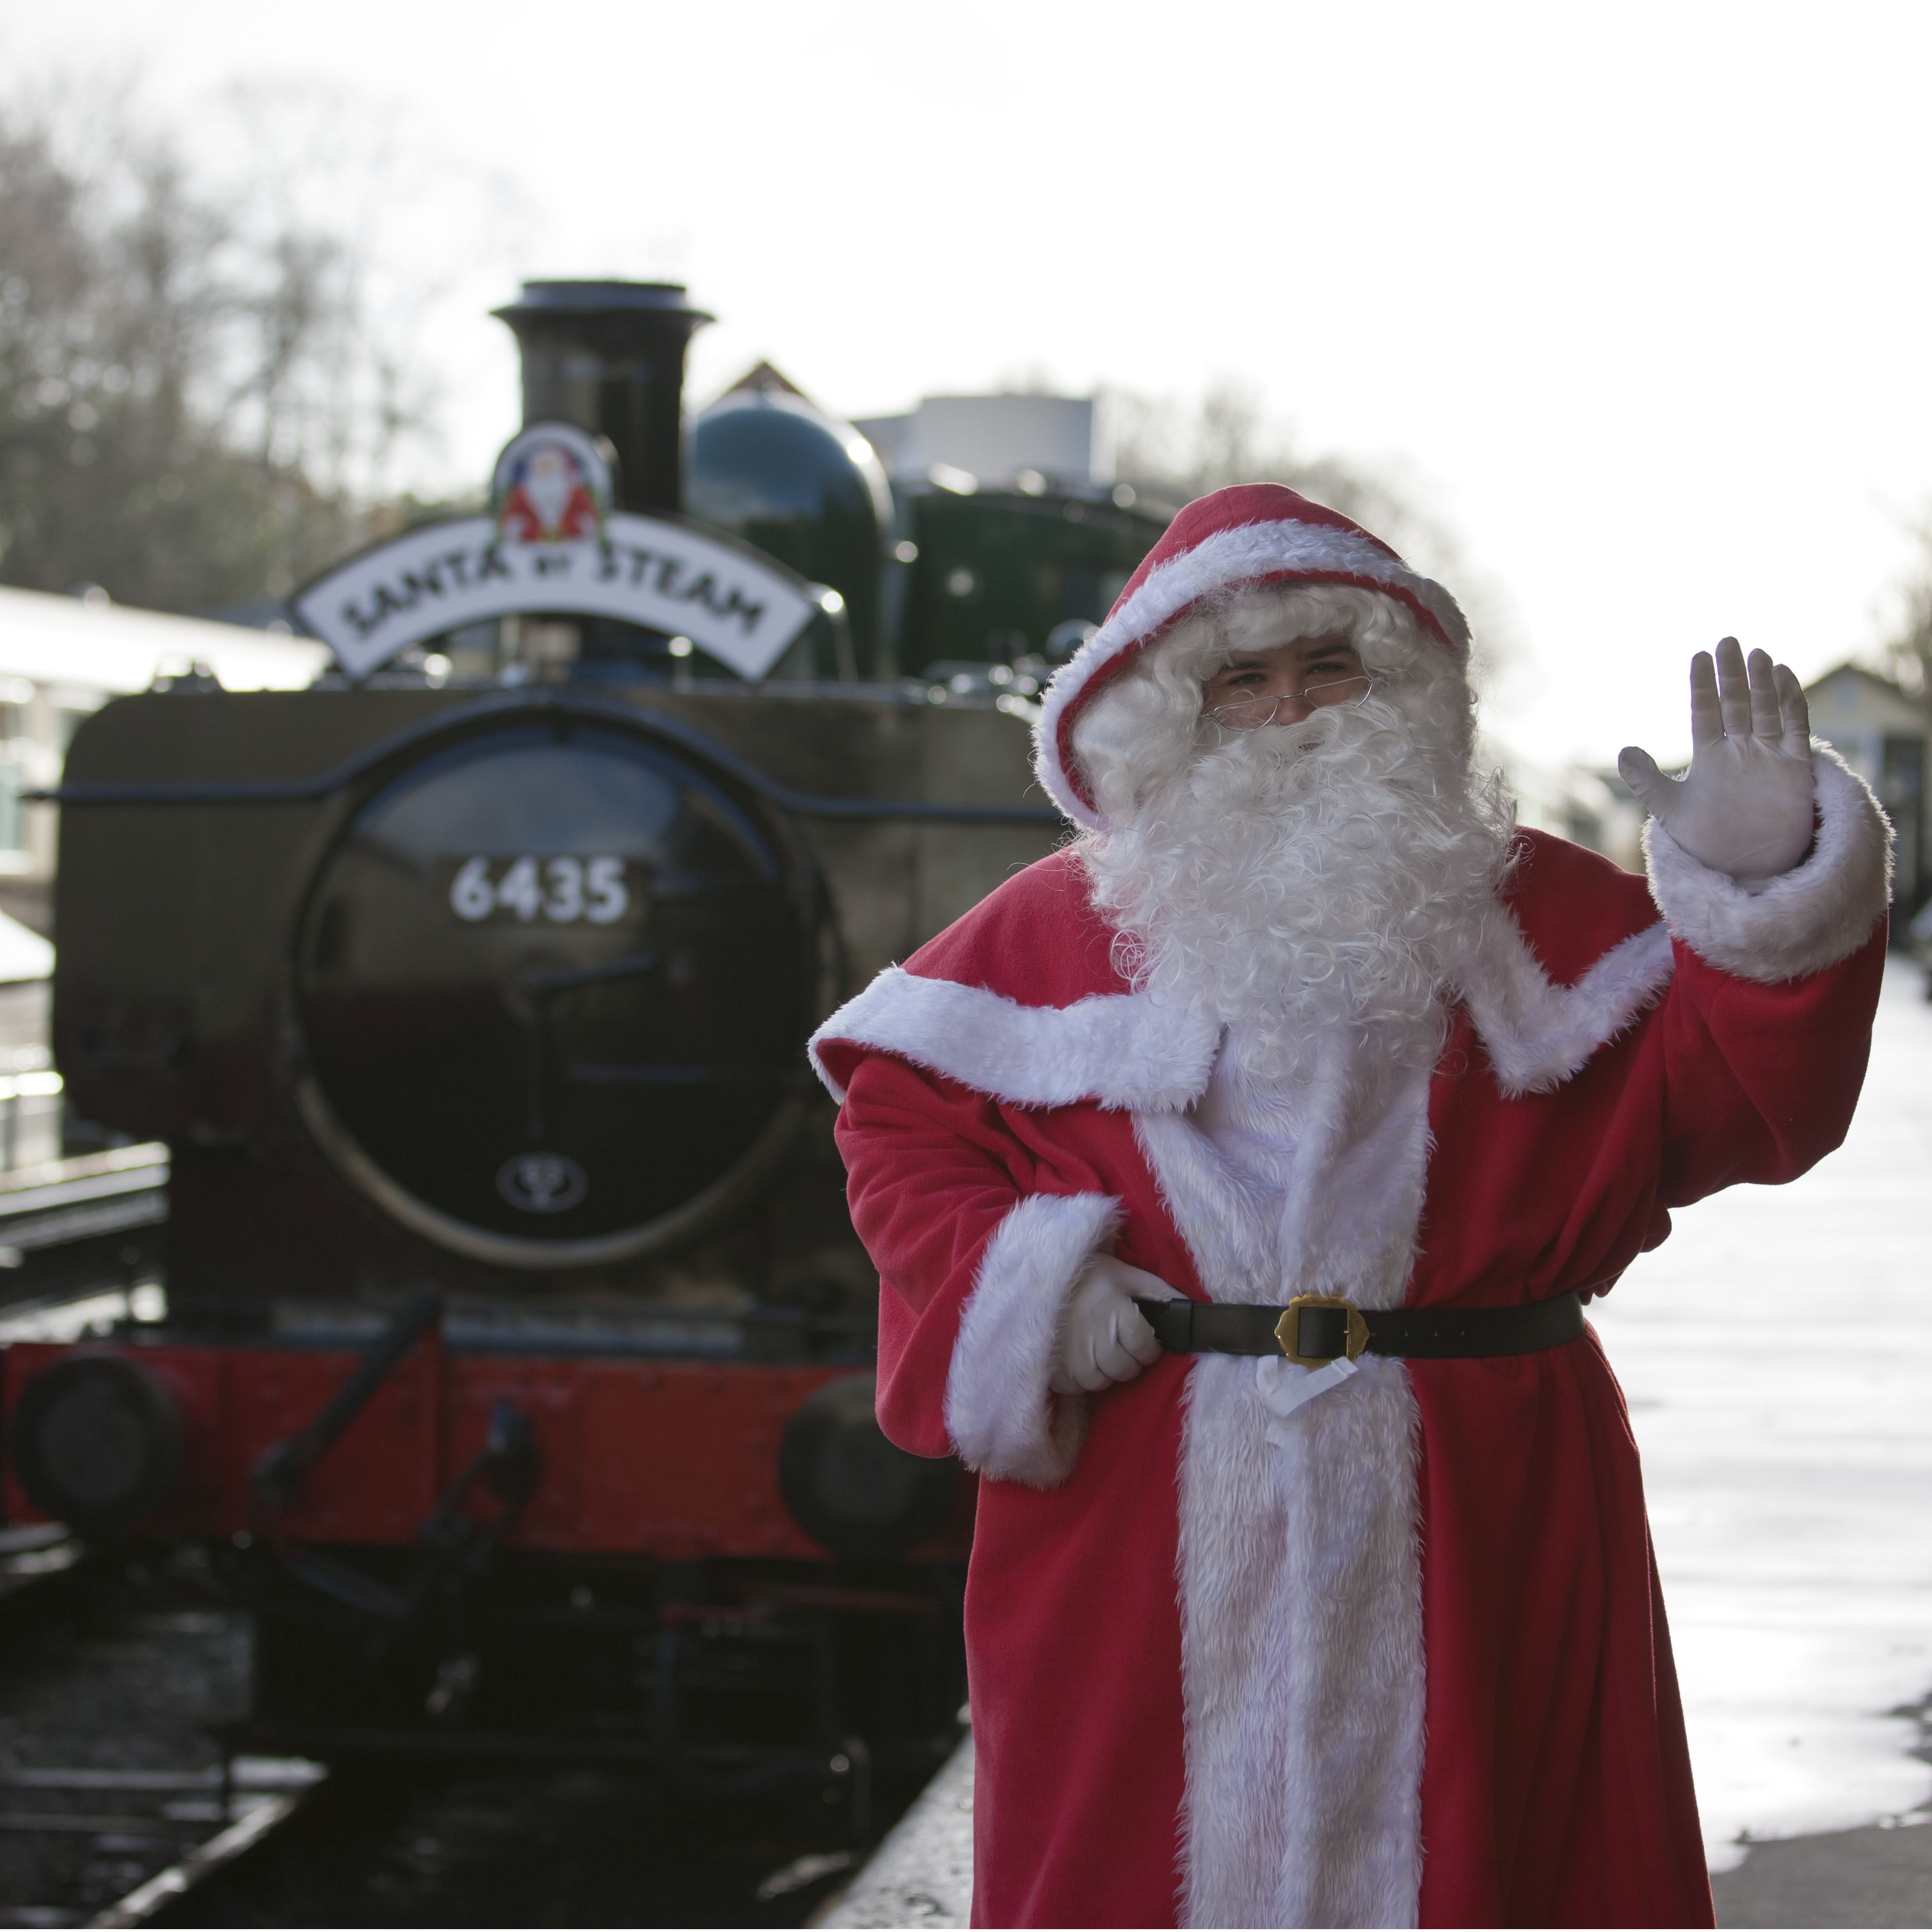 Santa is looking for a new helper // Credit: Bodmin & Wenford Railway